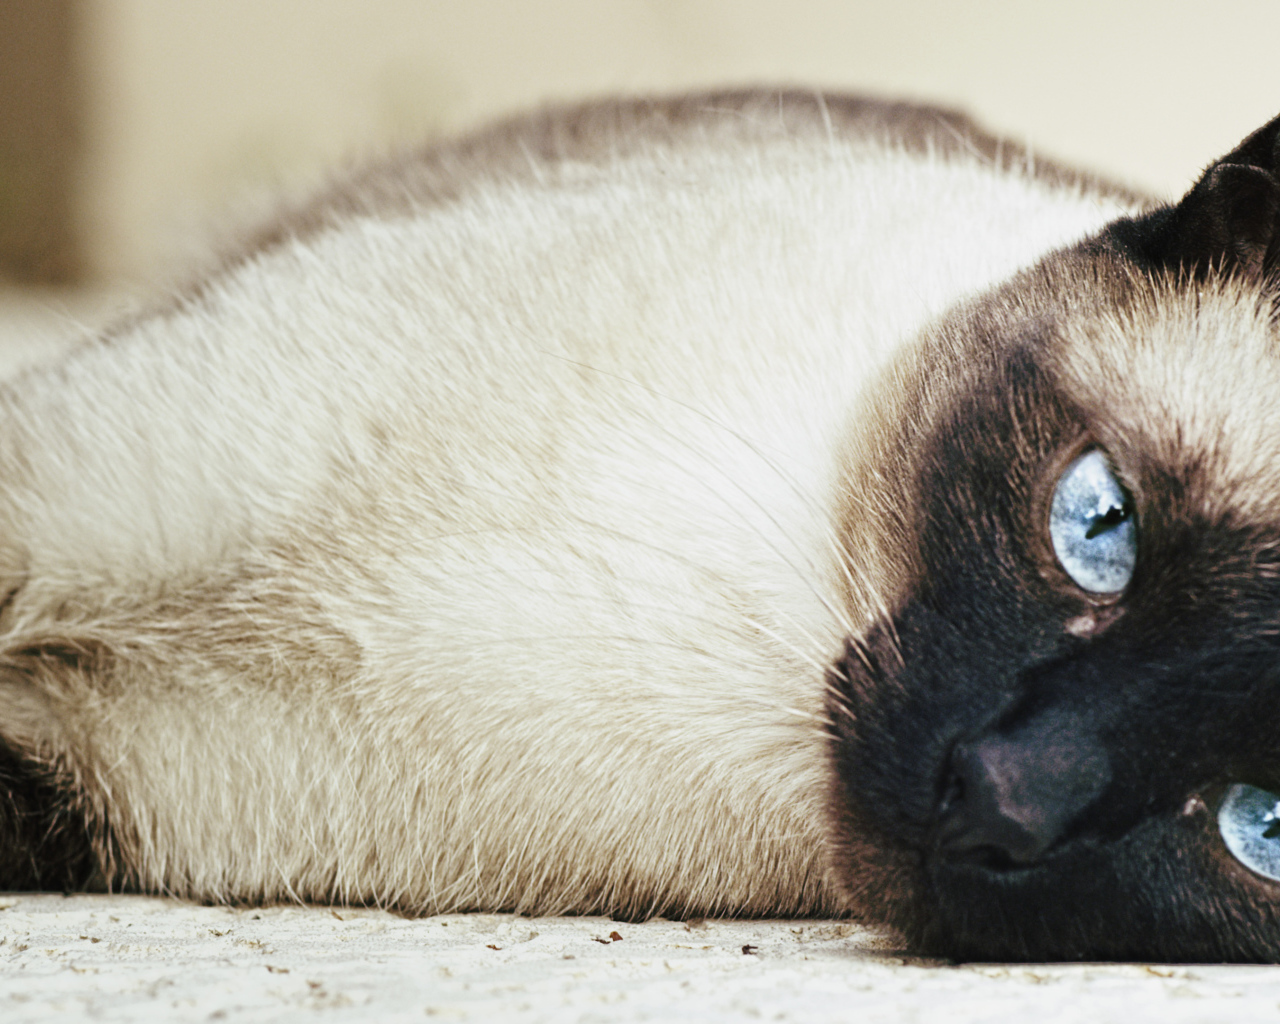 Siamese cat sprawled on the floor